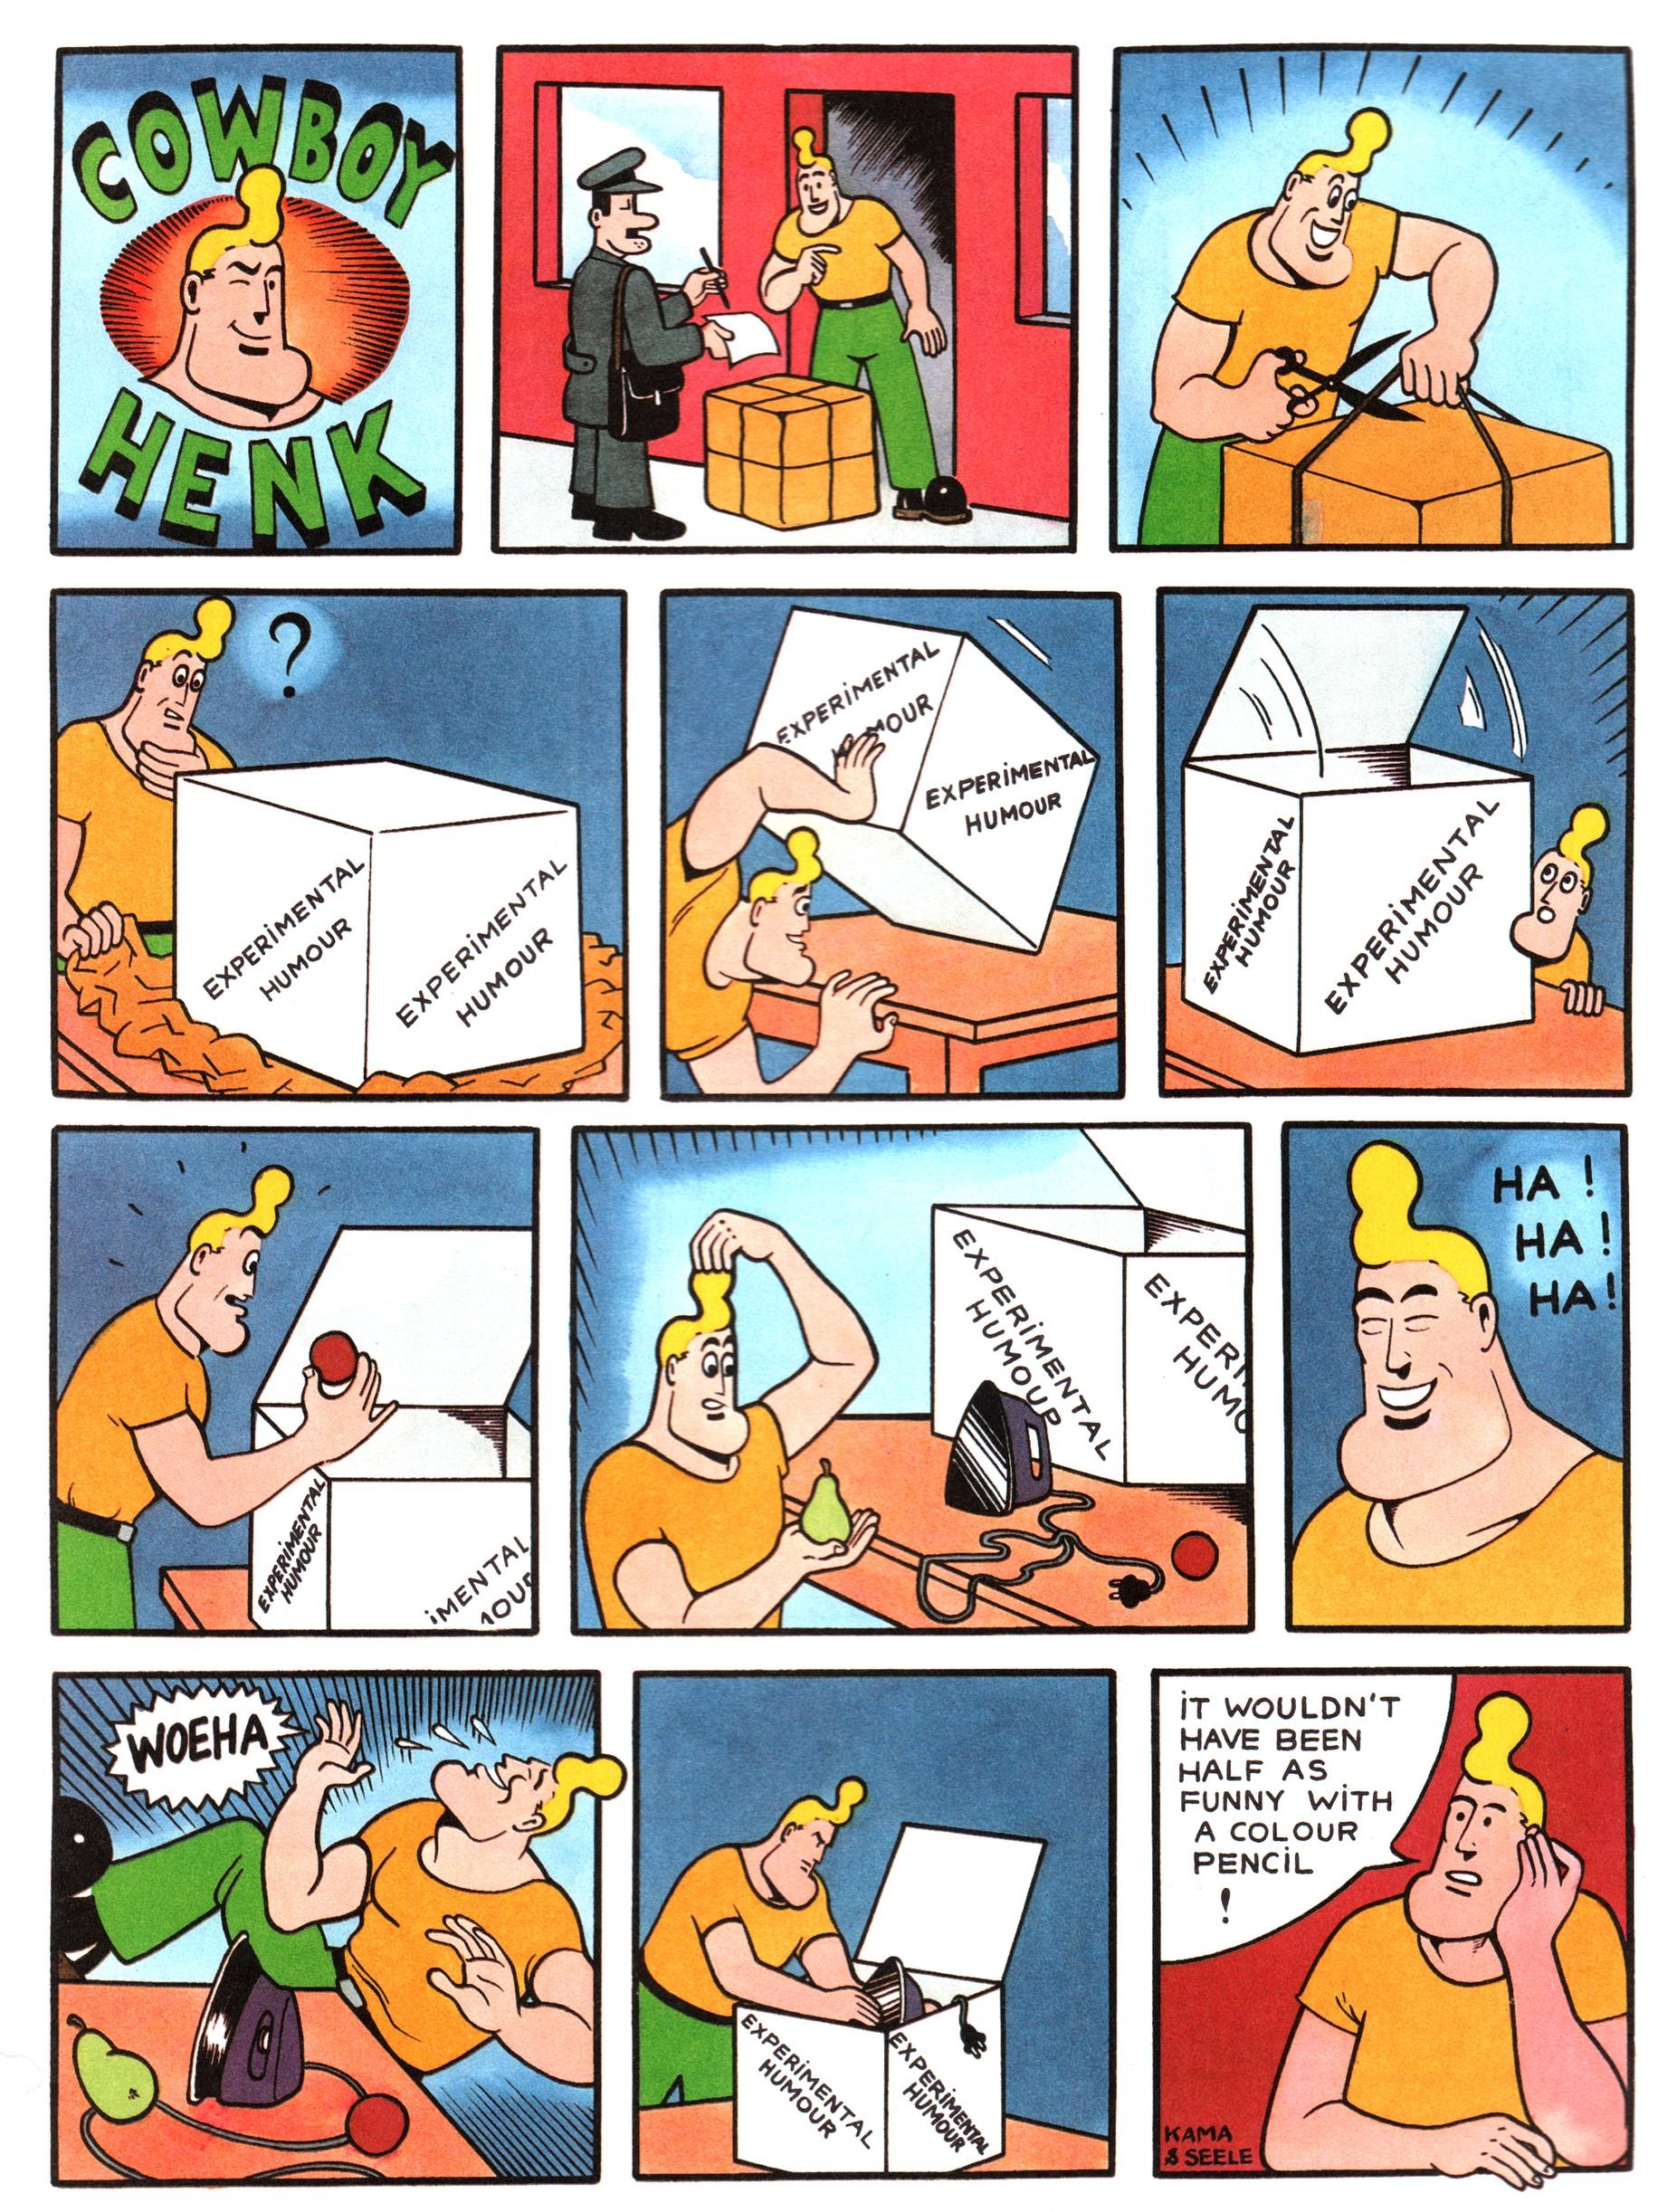 Read online Cowboy Henk: King of Dental Floss comic -  Issue # Full - 30